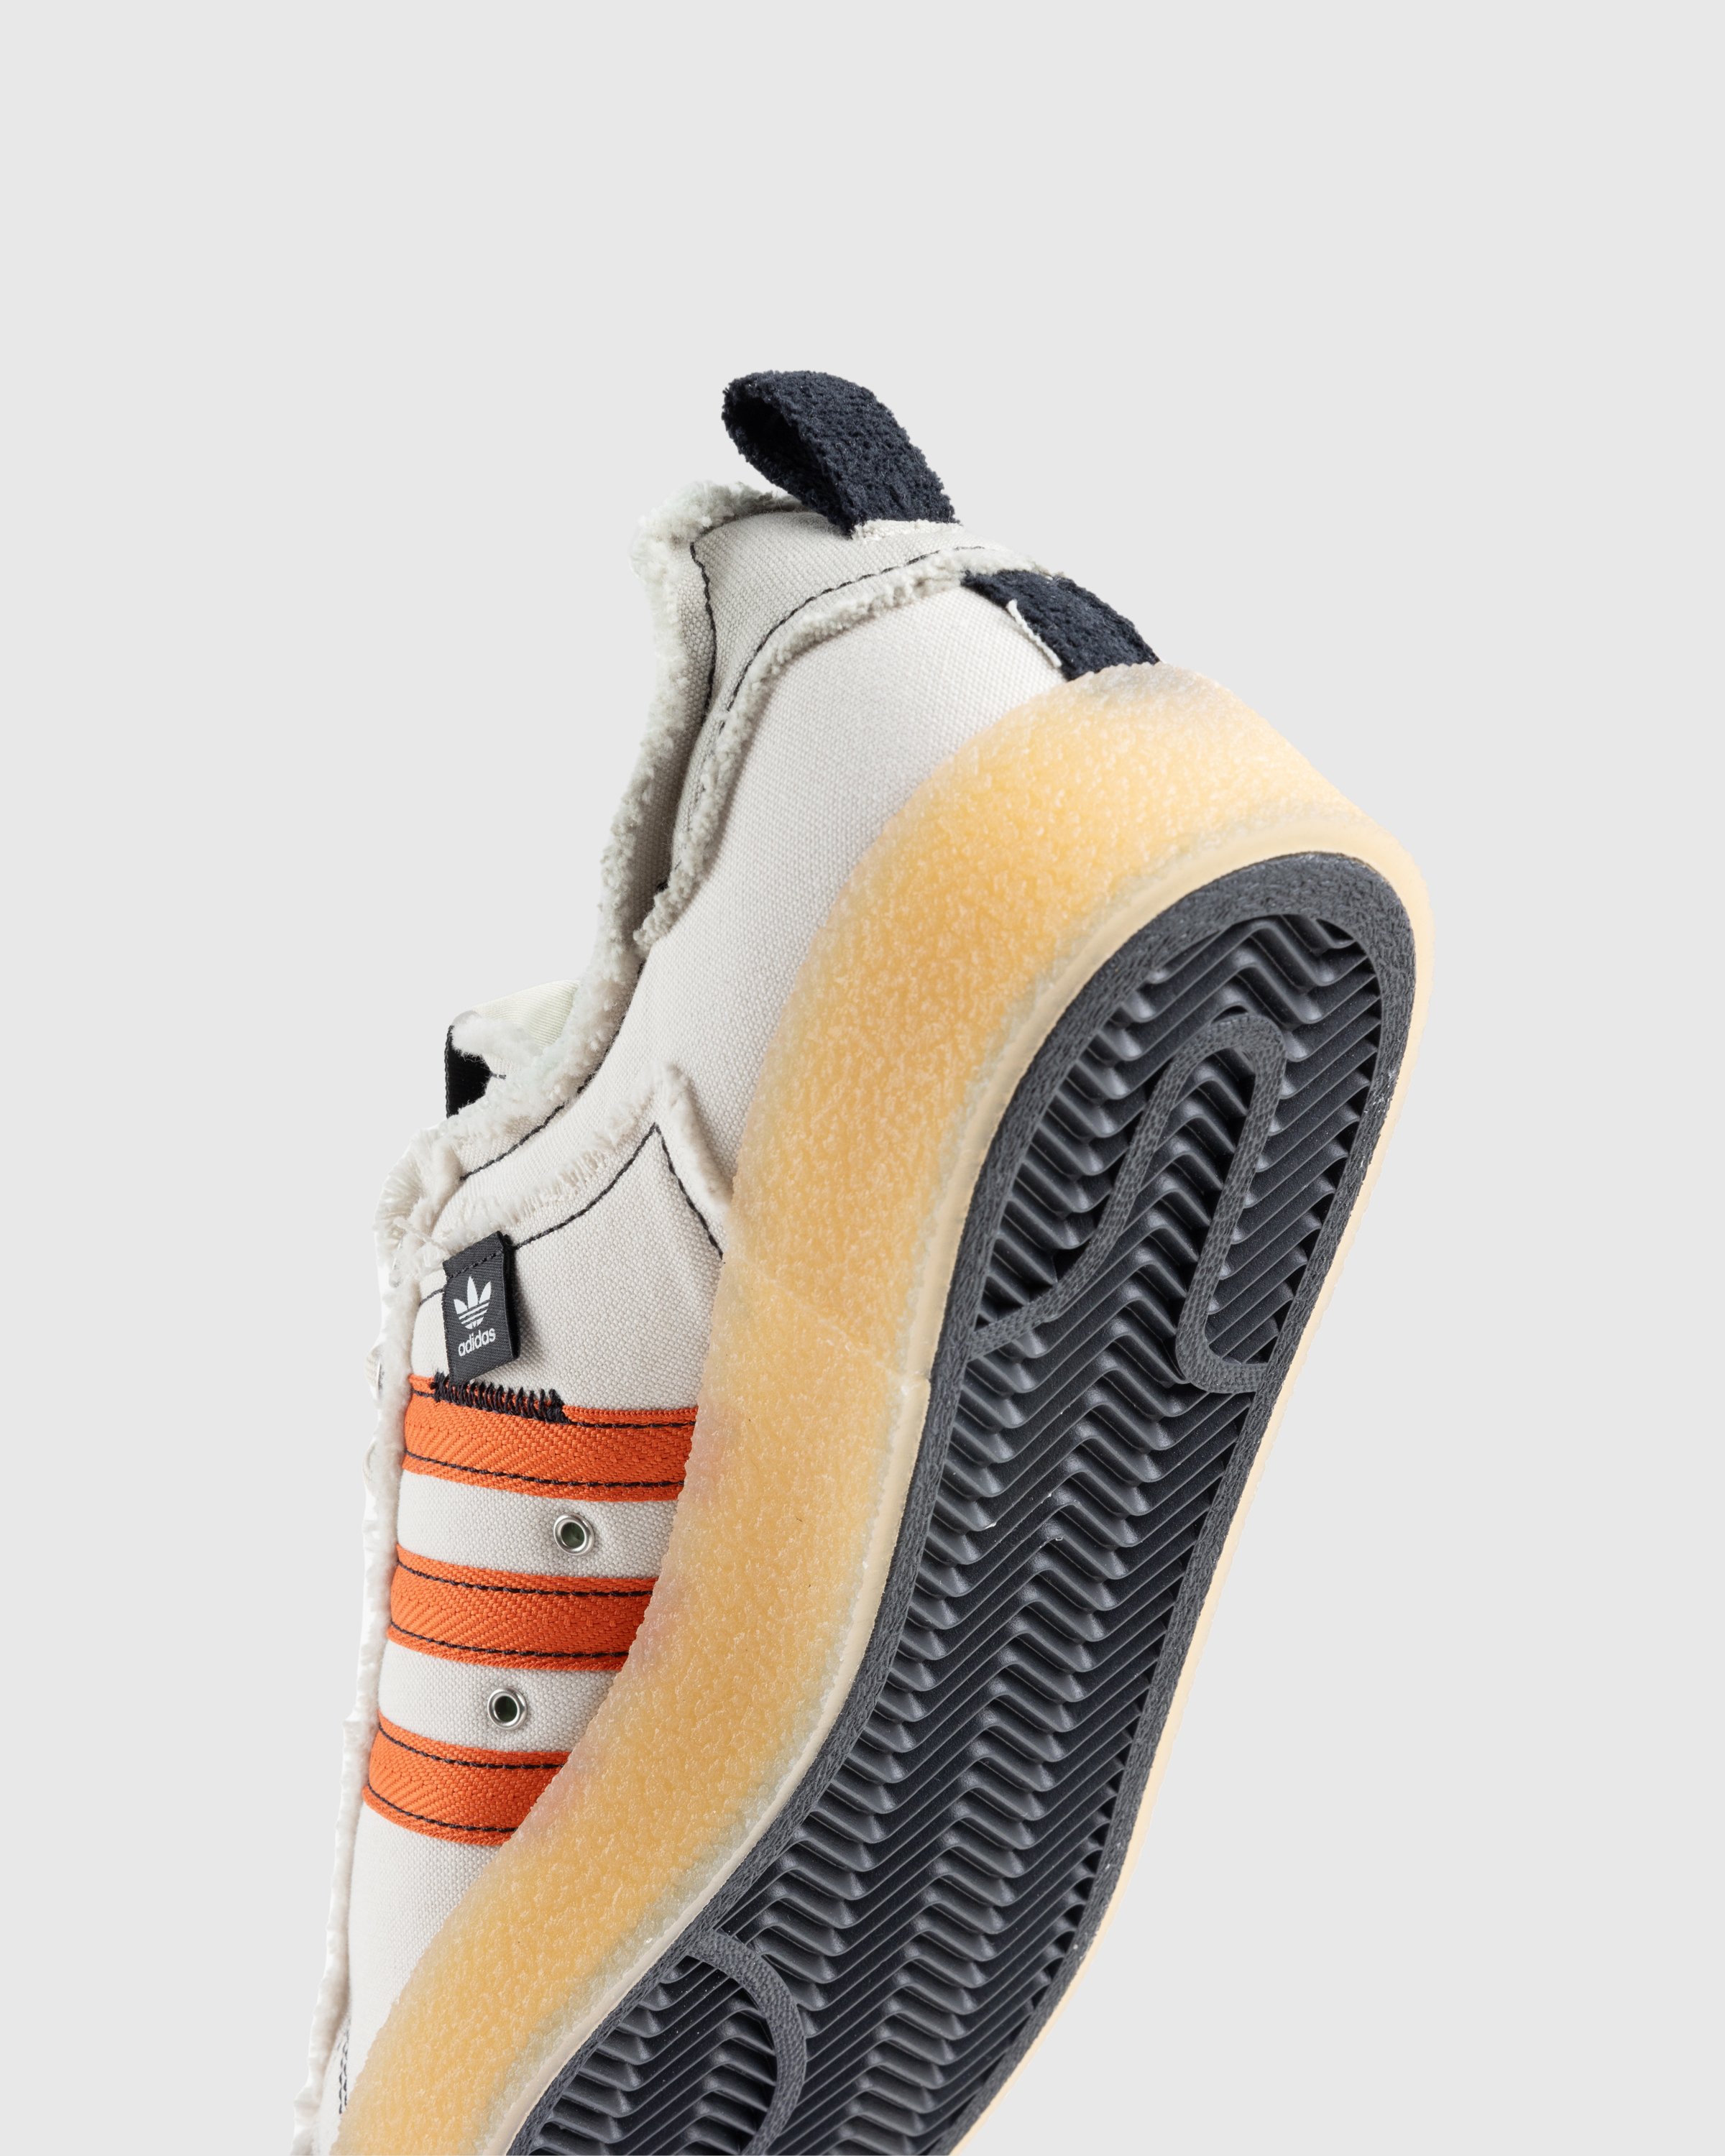 Adidas - CAMPUS 80s CBROWN/CBLACK/SESAME - Footwear - Brown - Image 6